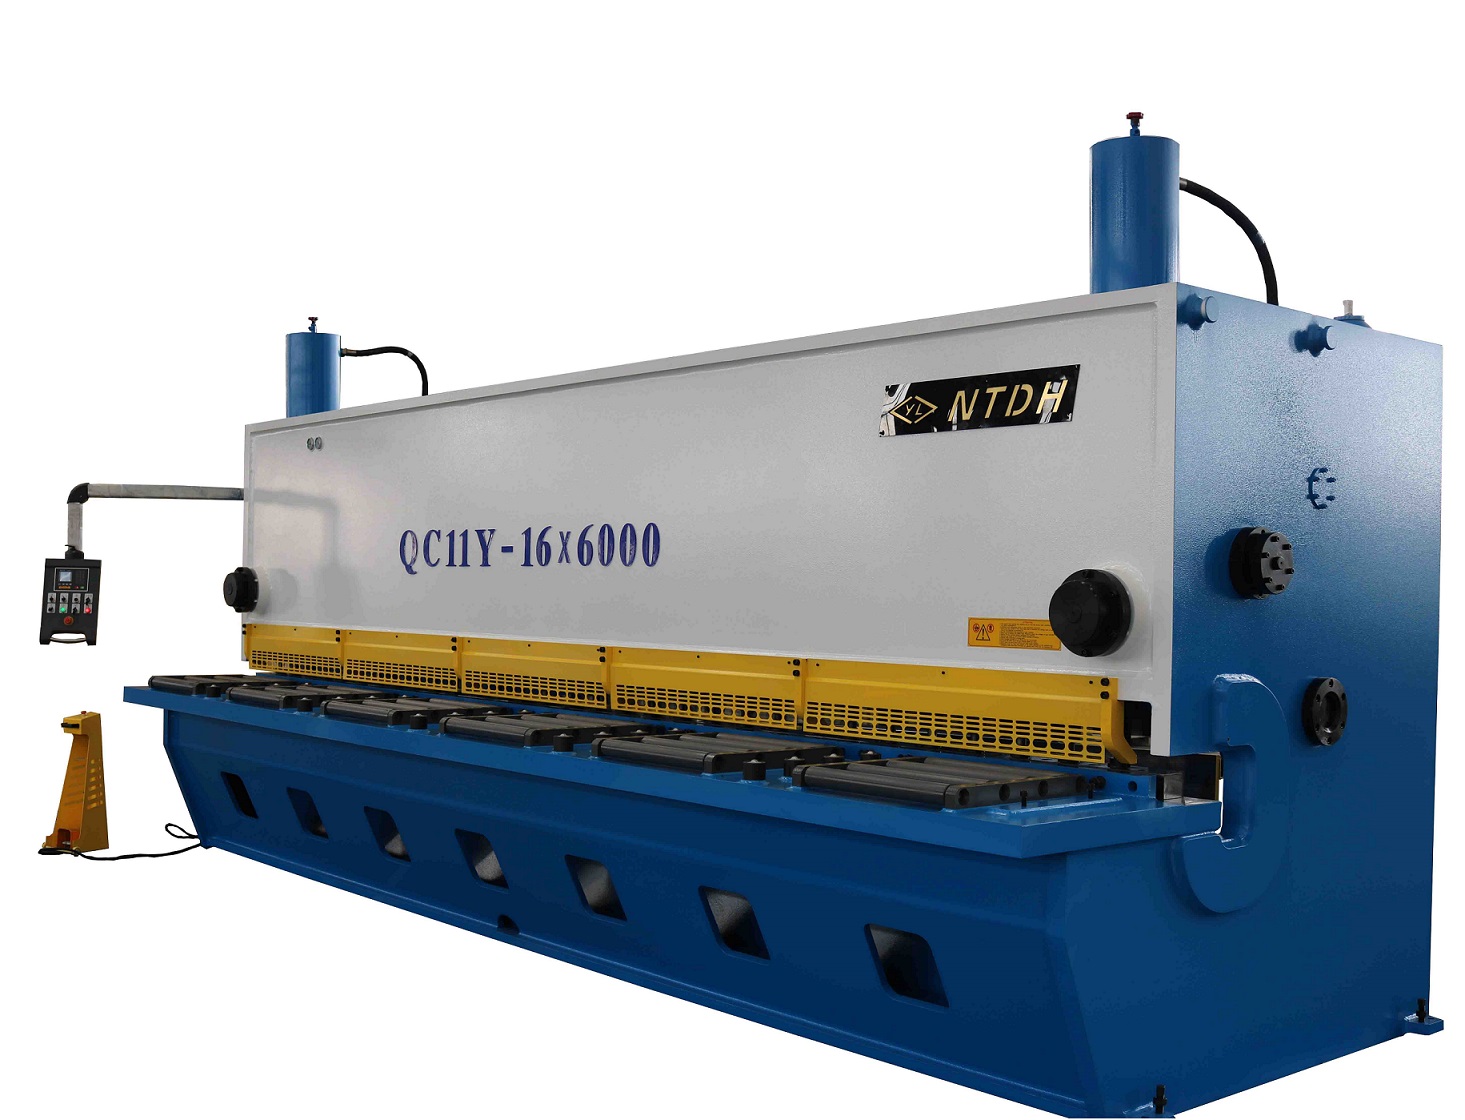 QC11Y-16x6000 hydraulic guillotine shearing machine